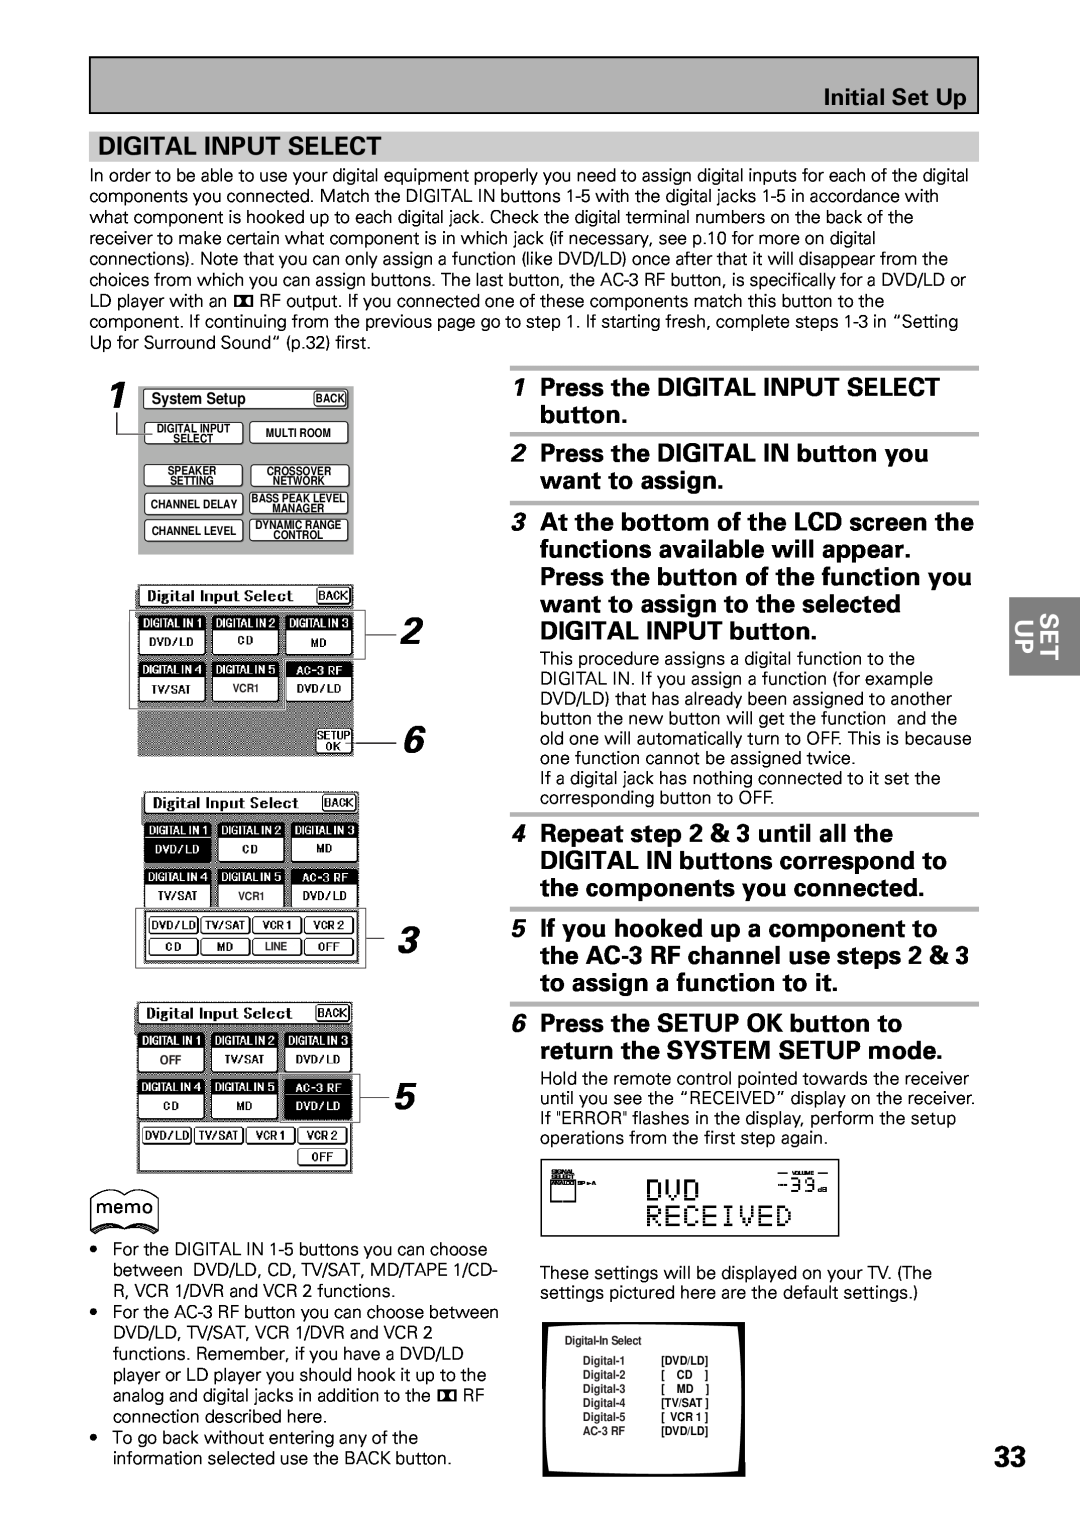 Pioneer VSX-39TX manual Digital Input Select, 1Press the DIGITAL INPUT SELECT button, DIGITAL INPUT button, Set Up 